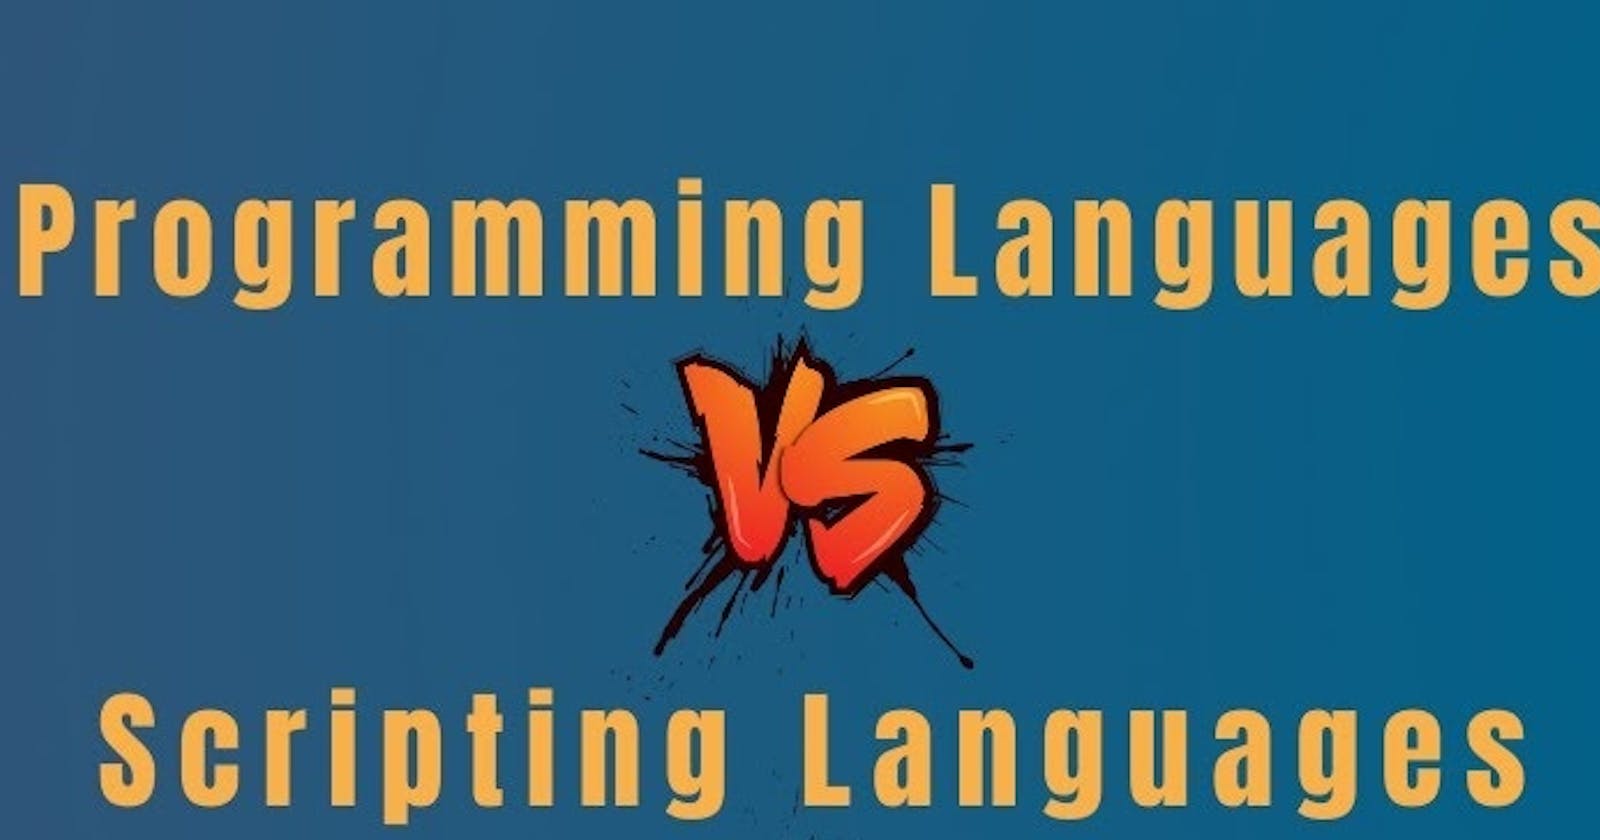 Scripting vs Programming Languages